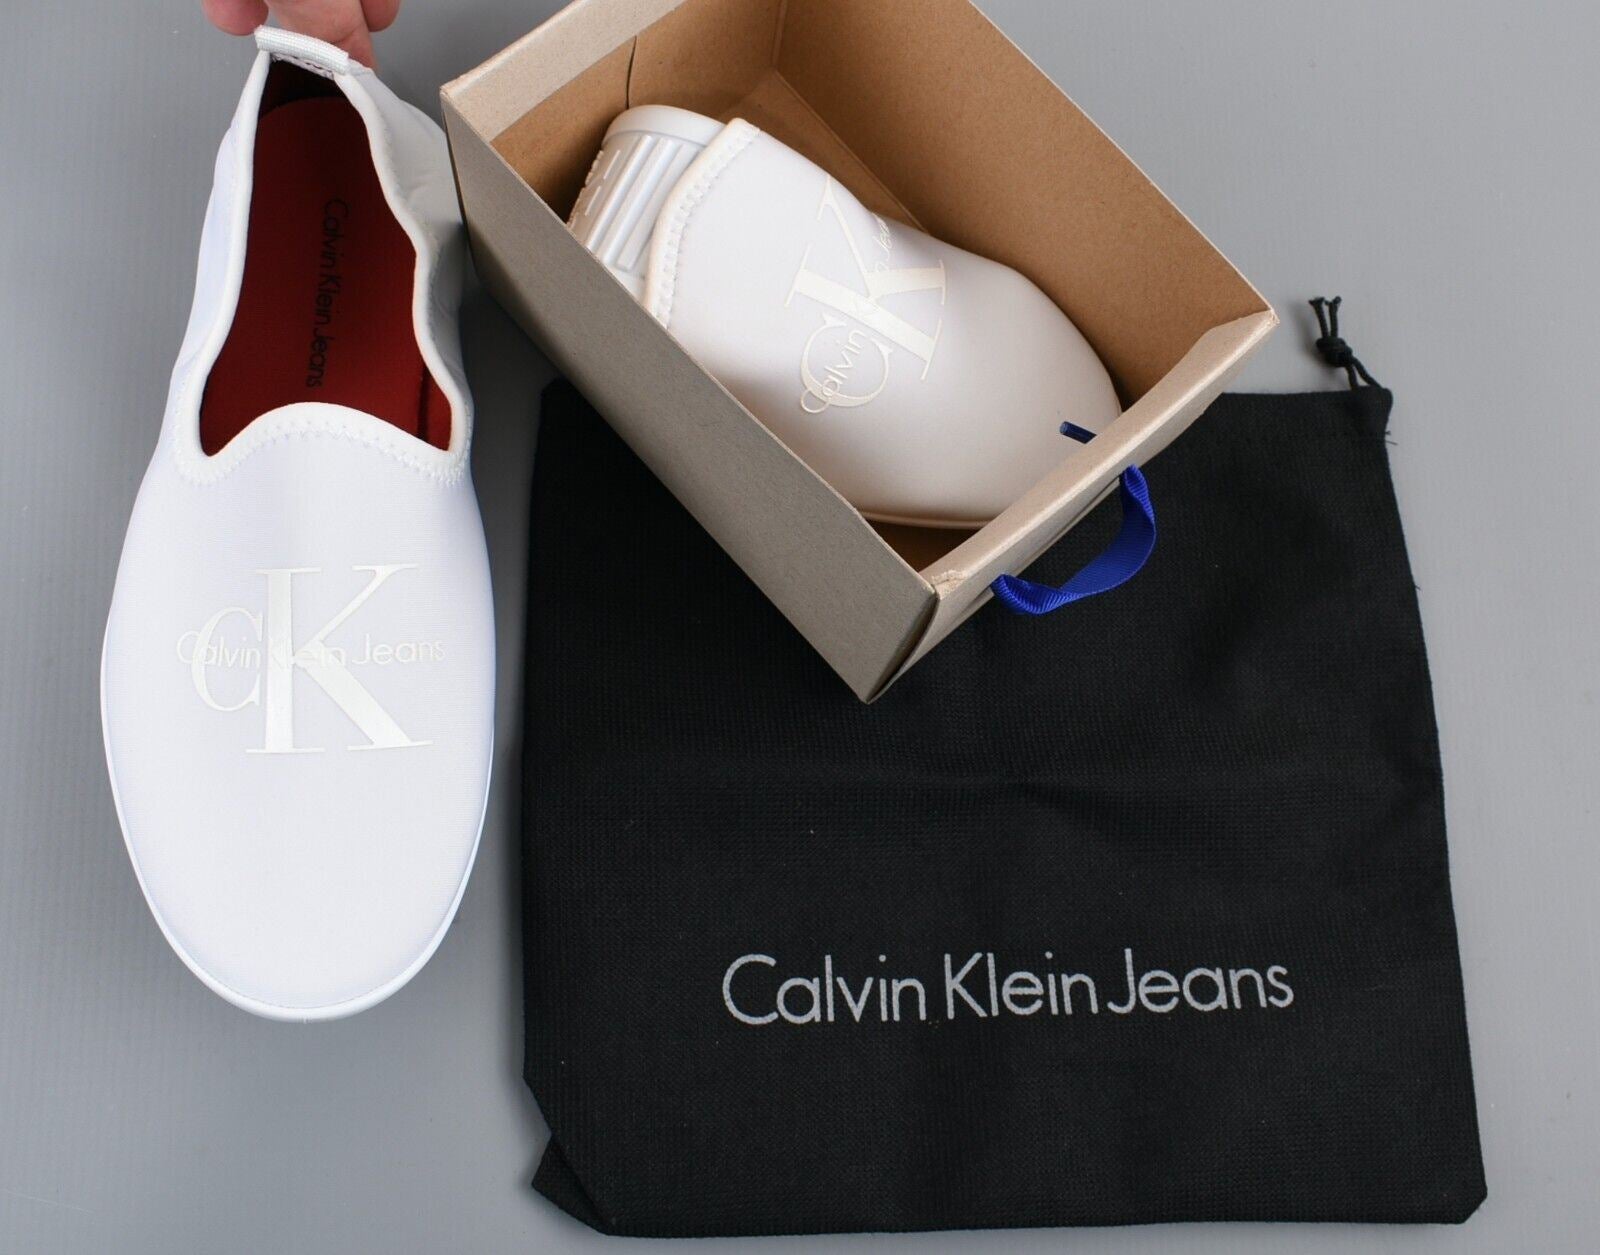 CALVIN KLEIN JEANS Women's TRACY Neoprene Slippers, White/Red, size M (UK 6)quan